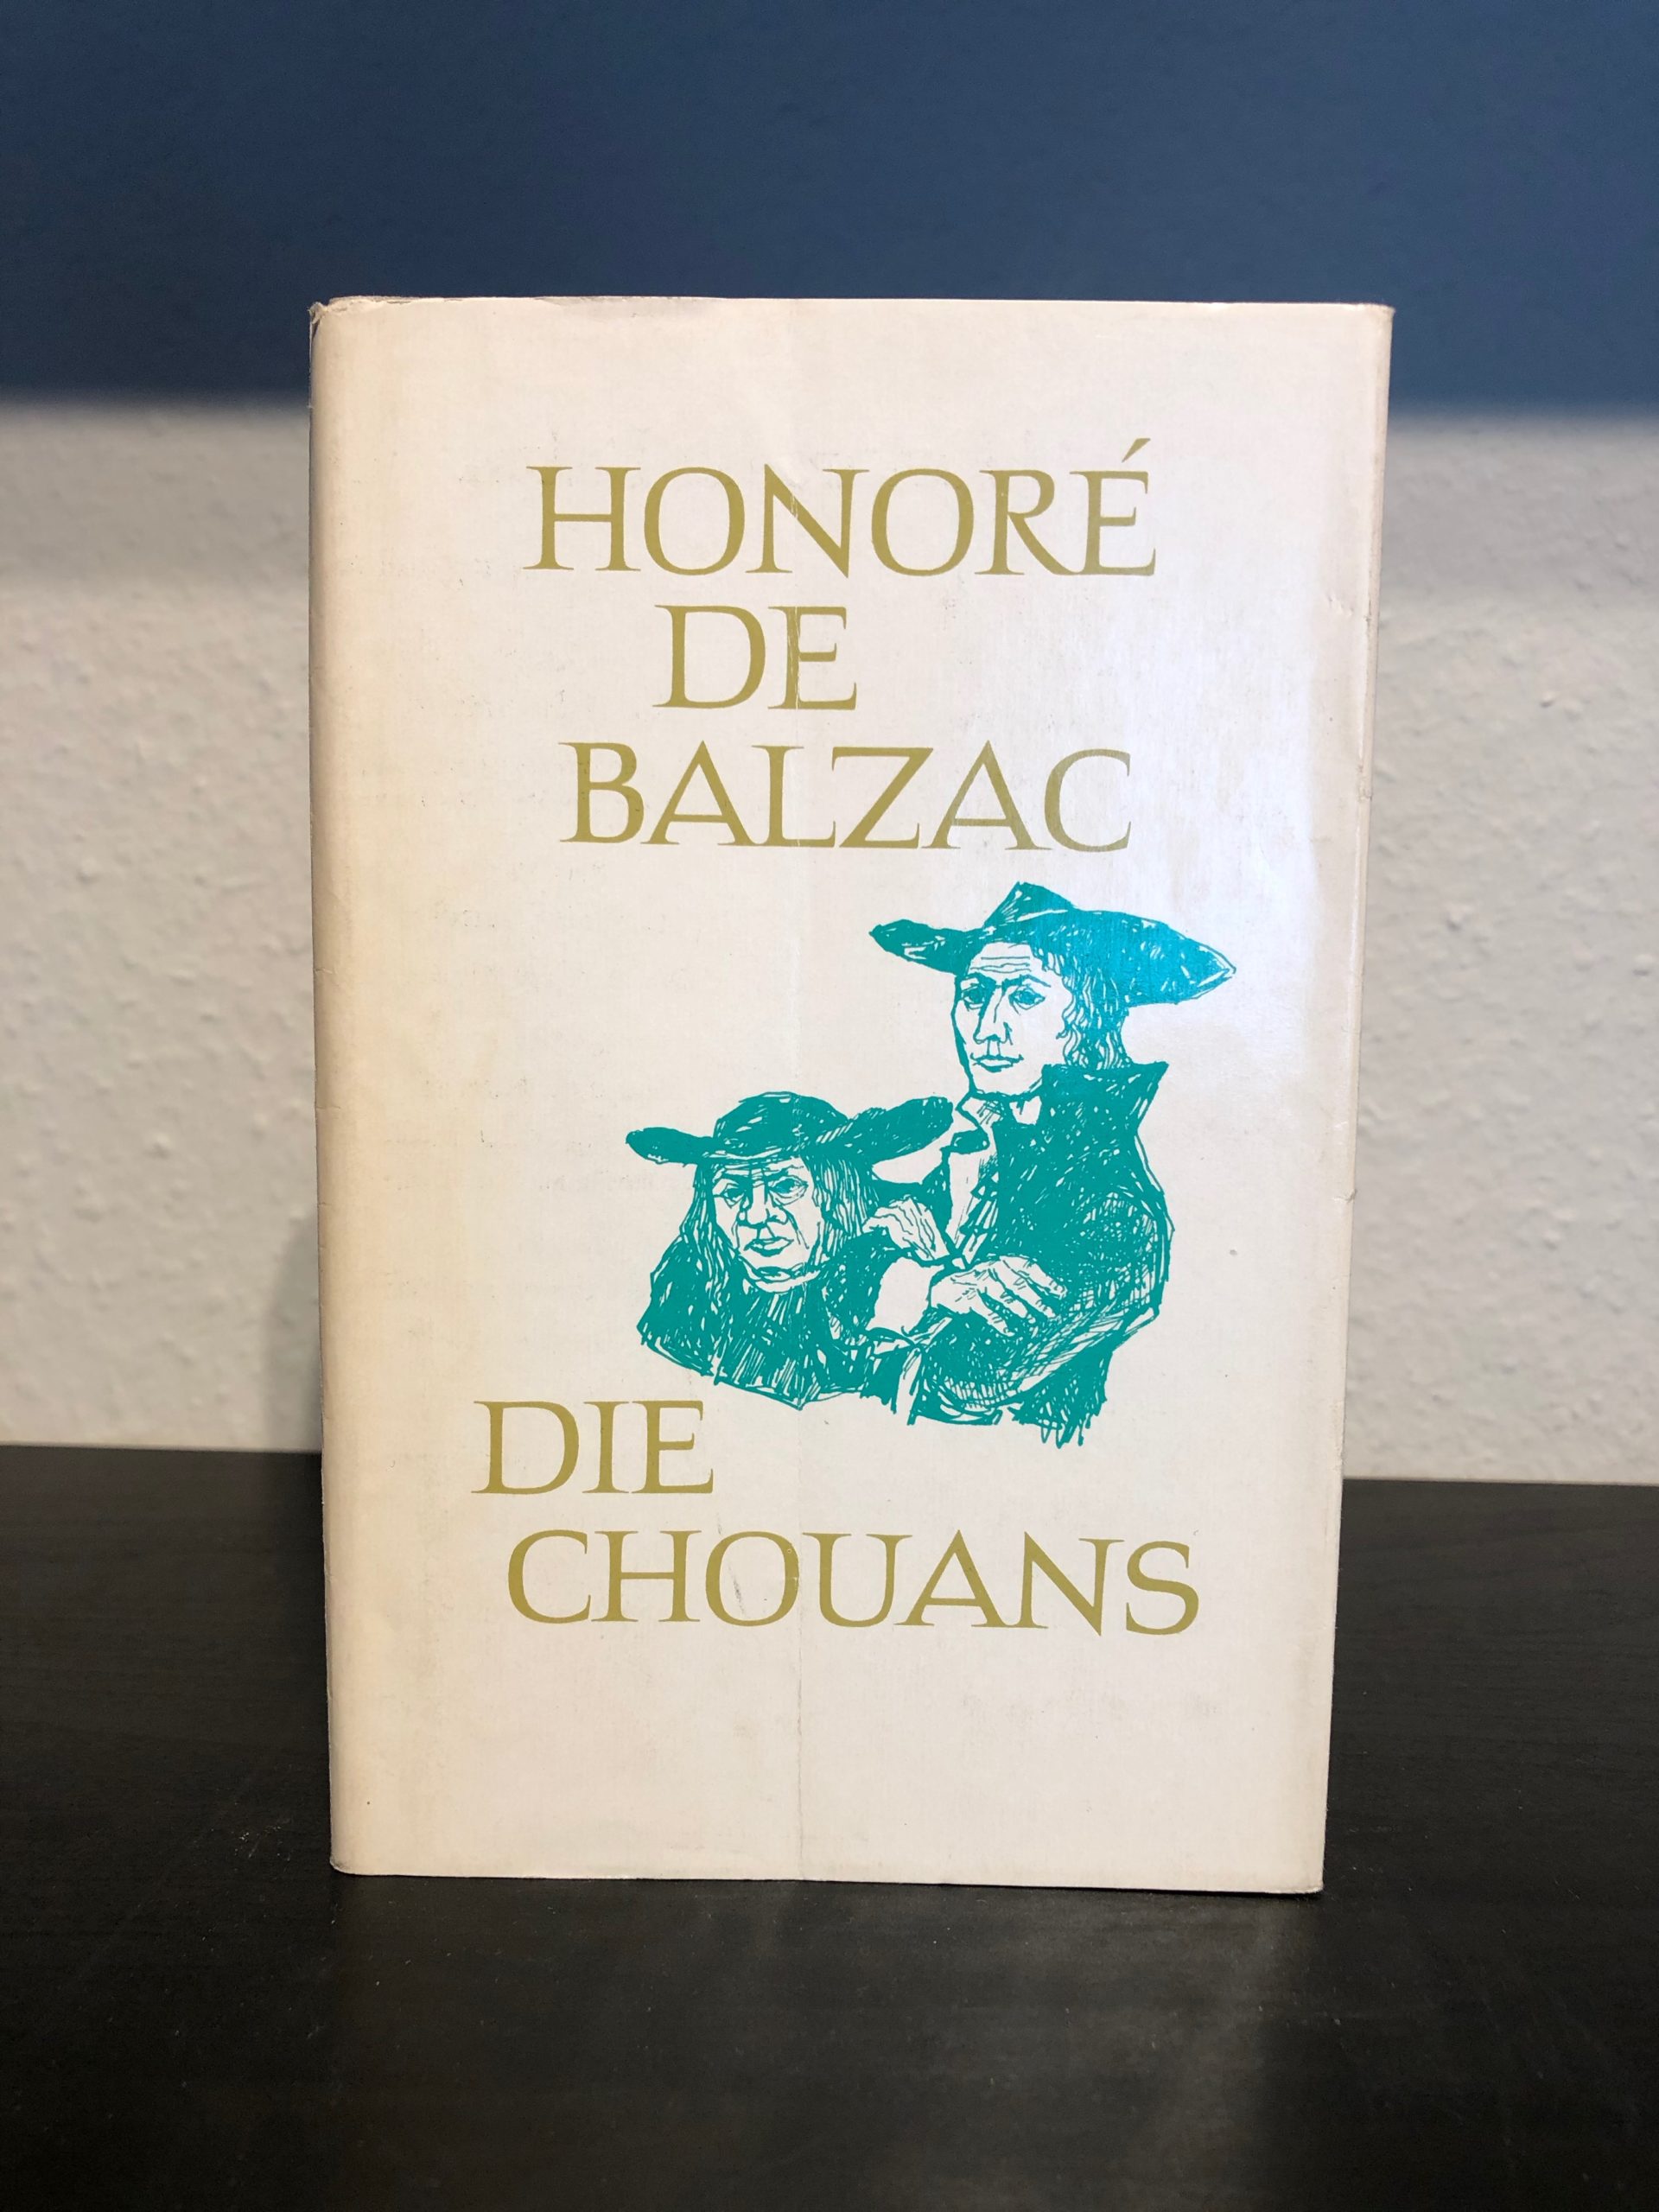 Die Chouans - Die Bretagne im Jahre 1799 - Honoré de Balzac main image